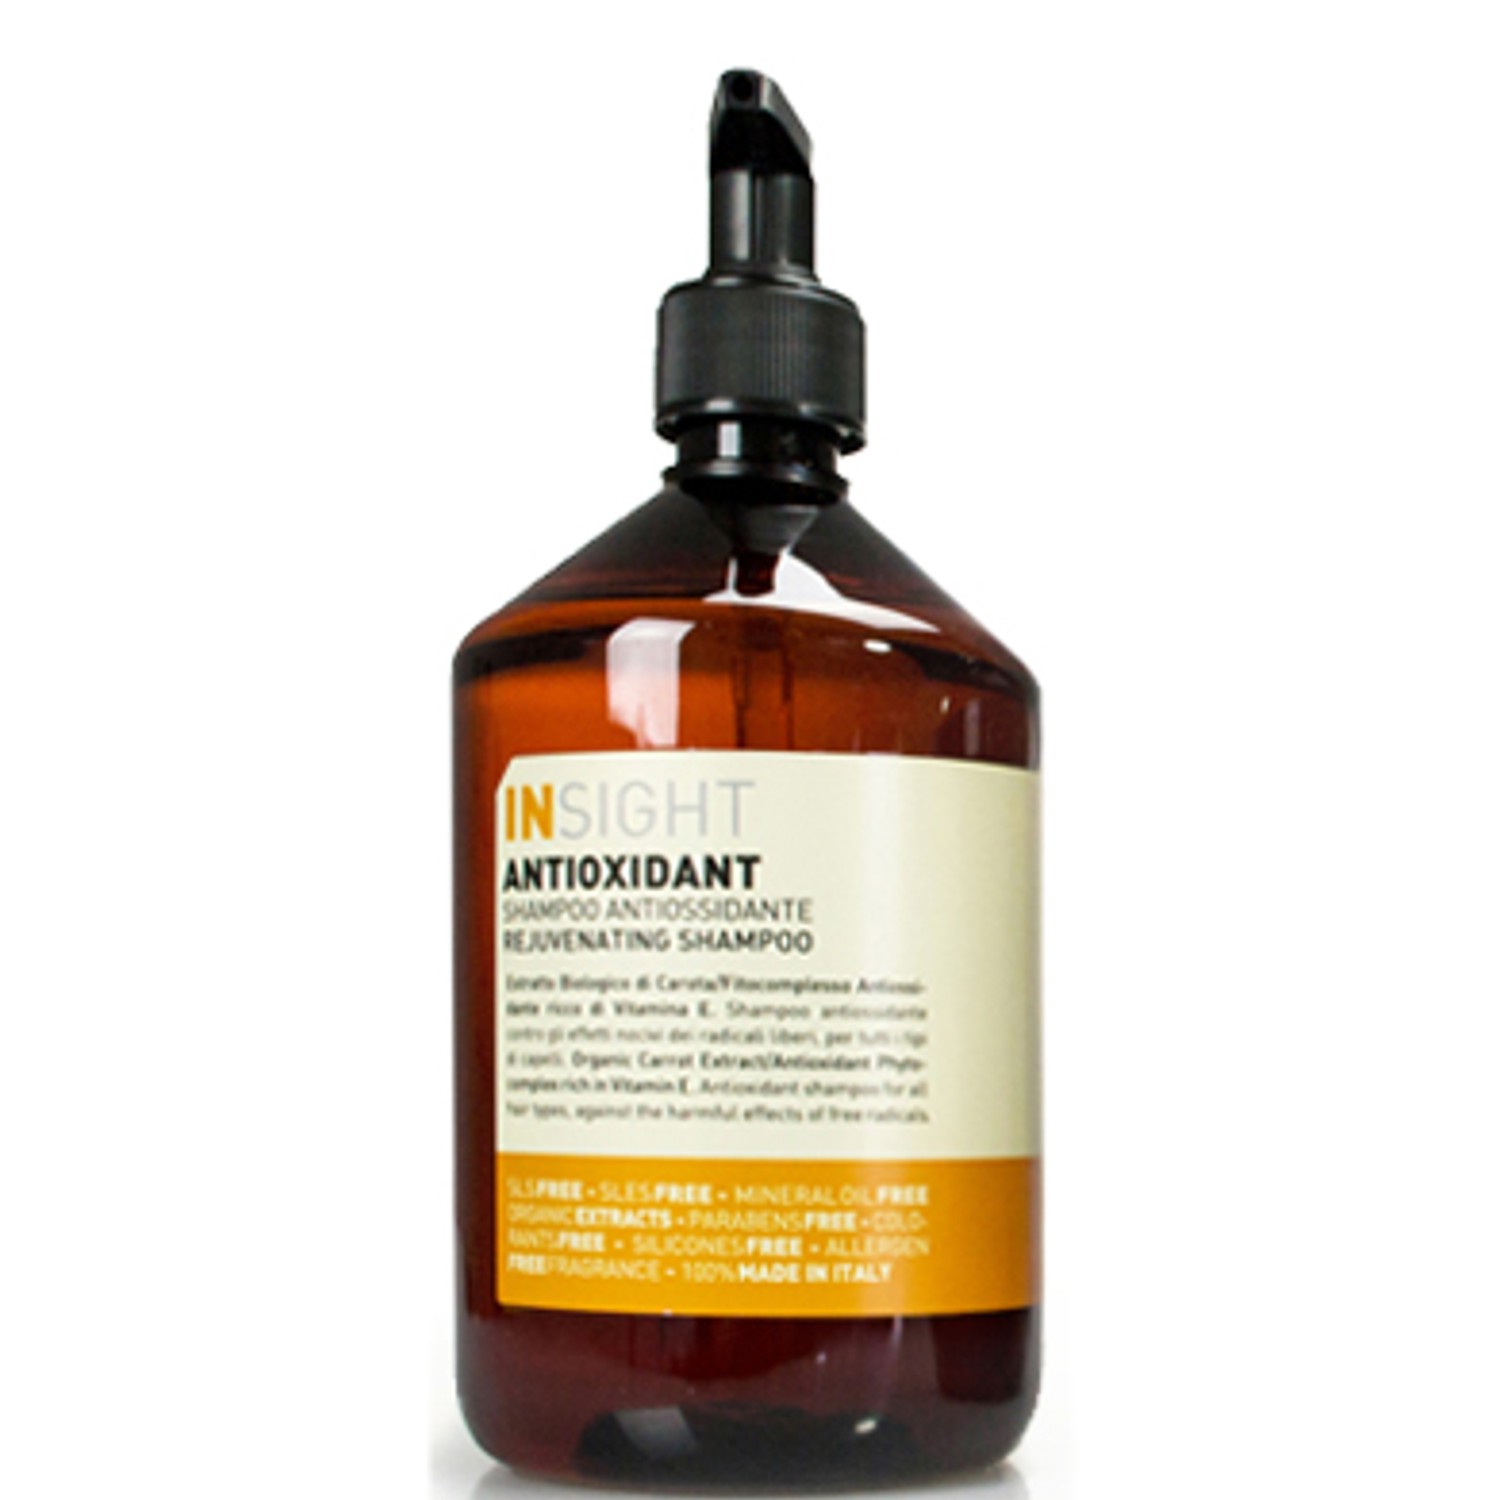 INSIGHT Antioxidant Rejuvenating Shampoo 400 ml